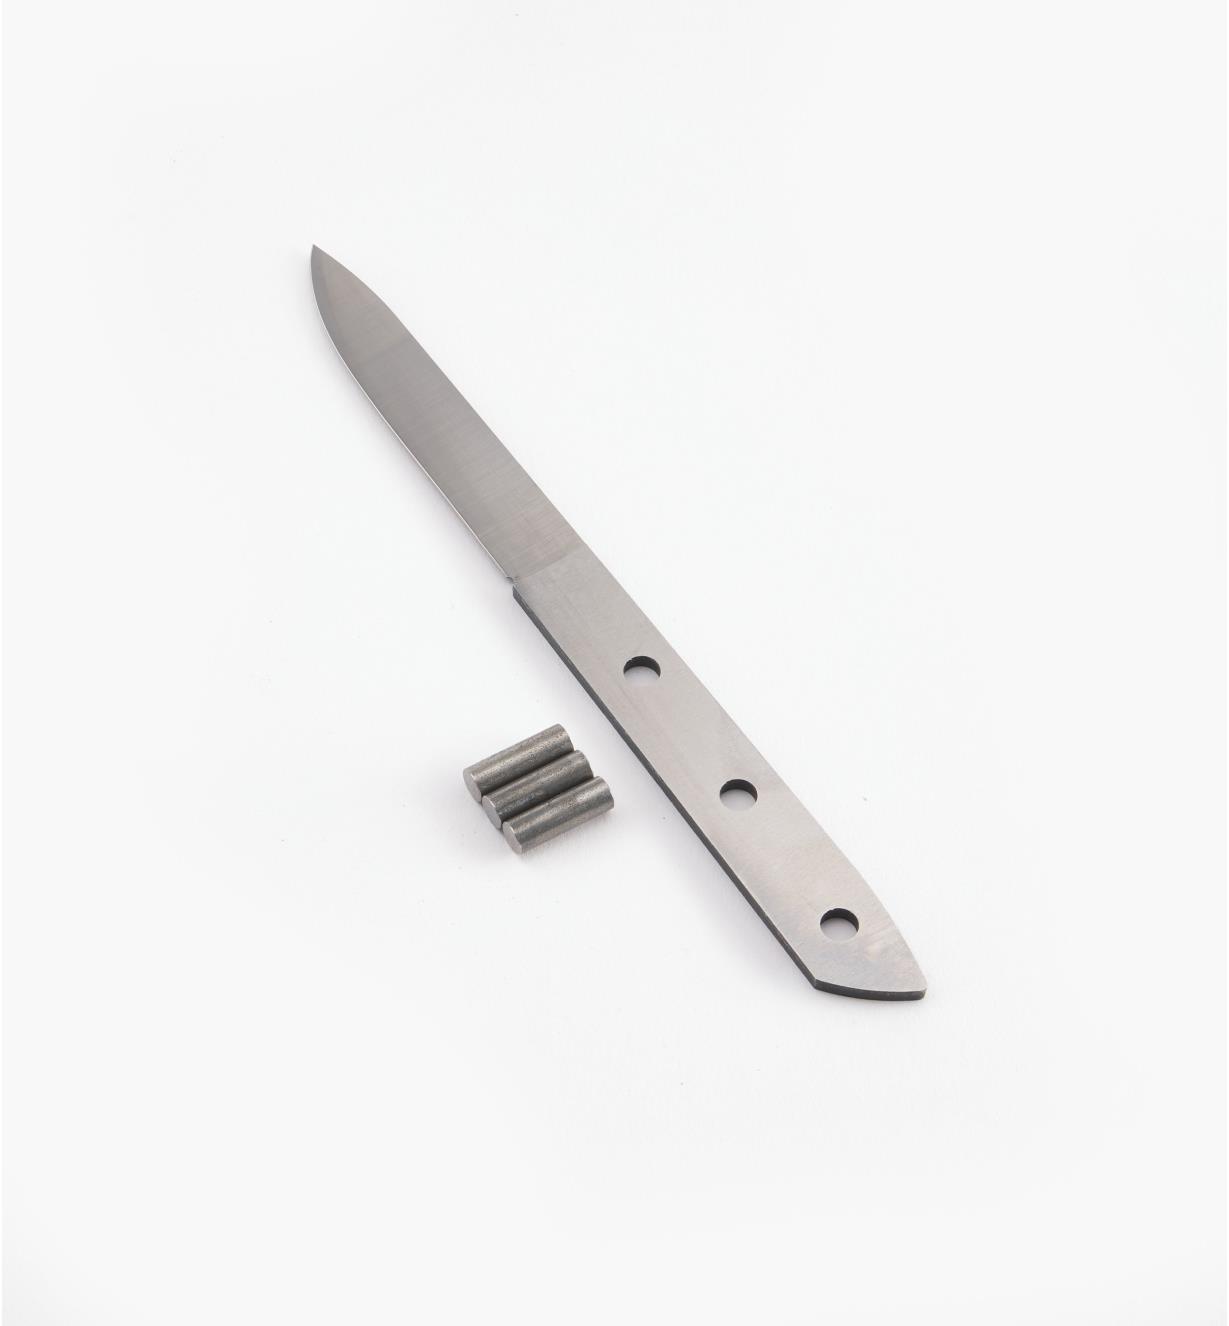 19P2455 - 1/8" × 3 1/2" Paring Knife Kit